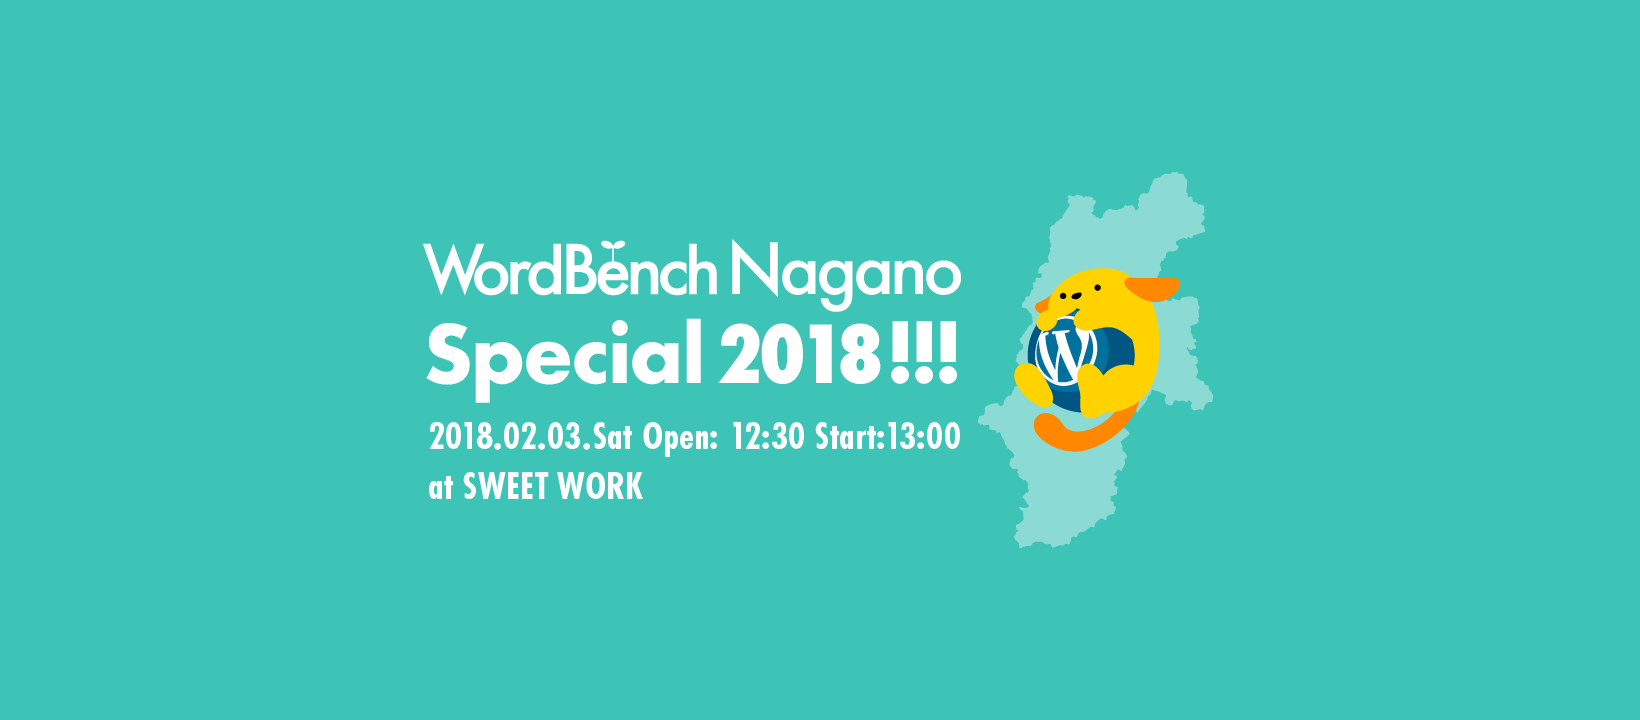 WordBench Nagano Special 2018 !!! を開催します。#wbnagano